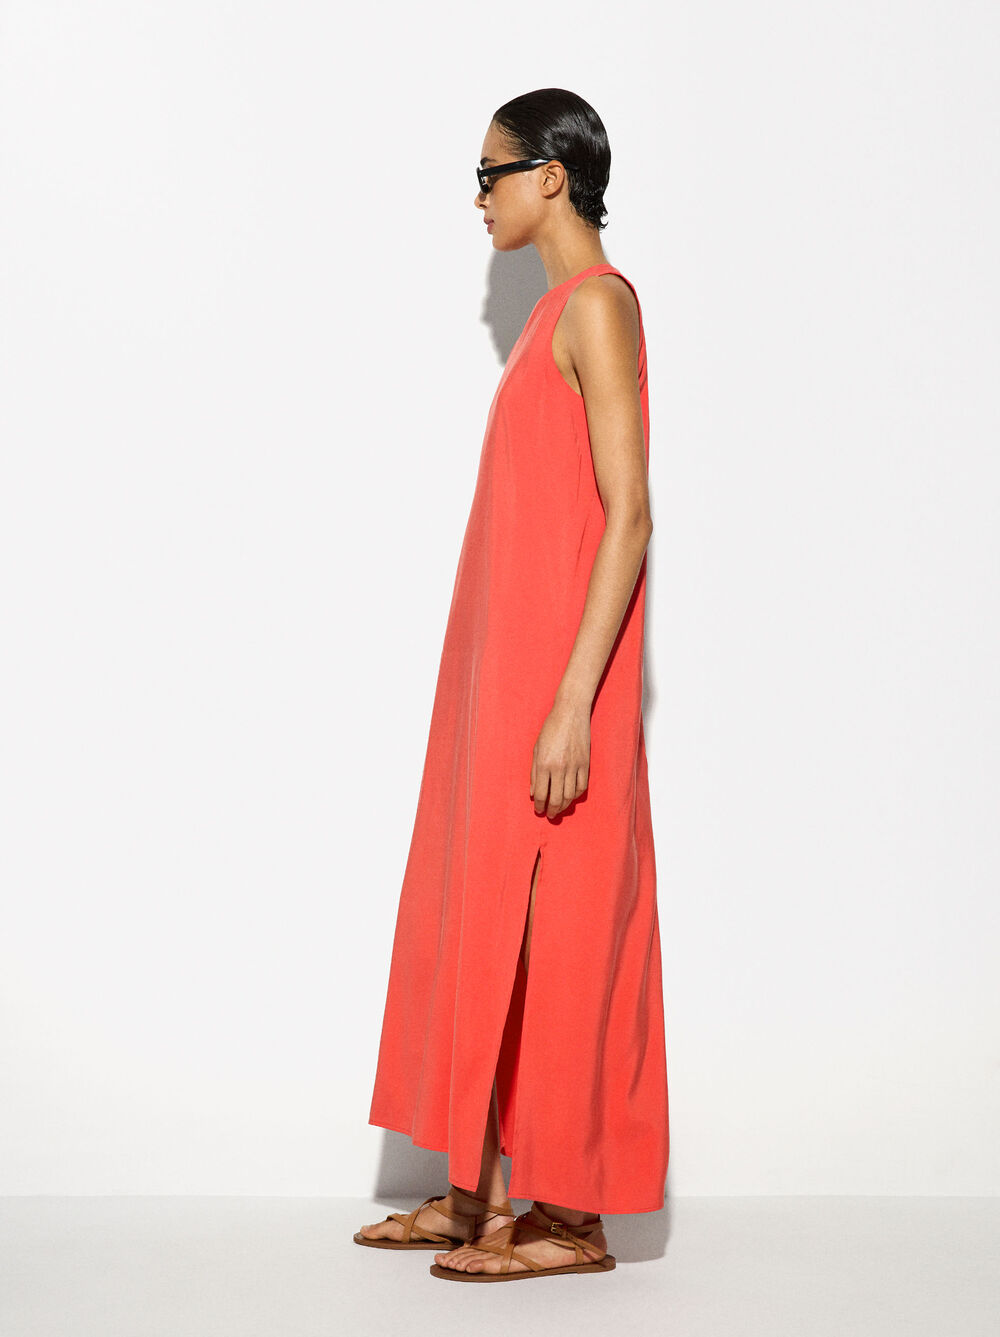 Loose-Fitting Sleeveless Dress image number 2.0